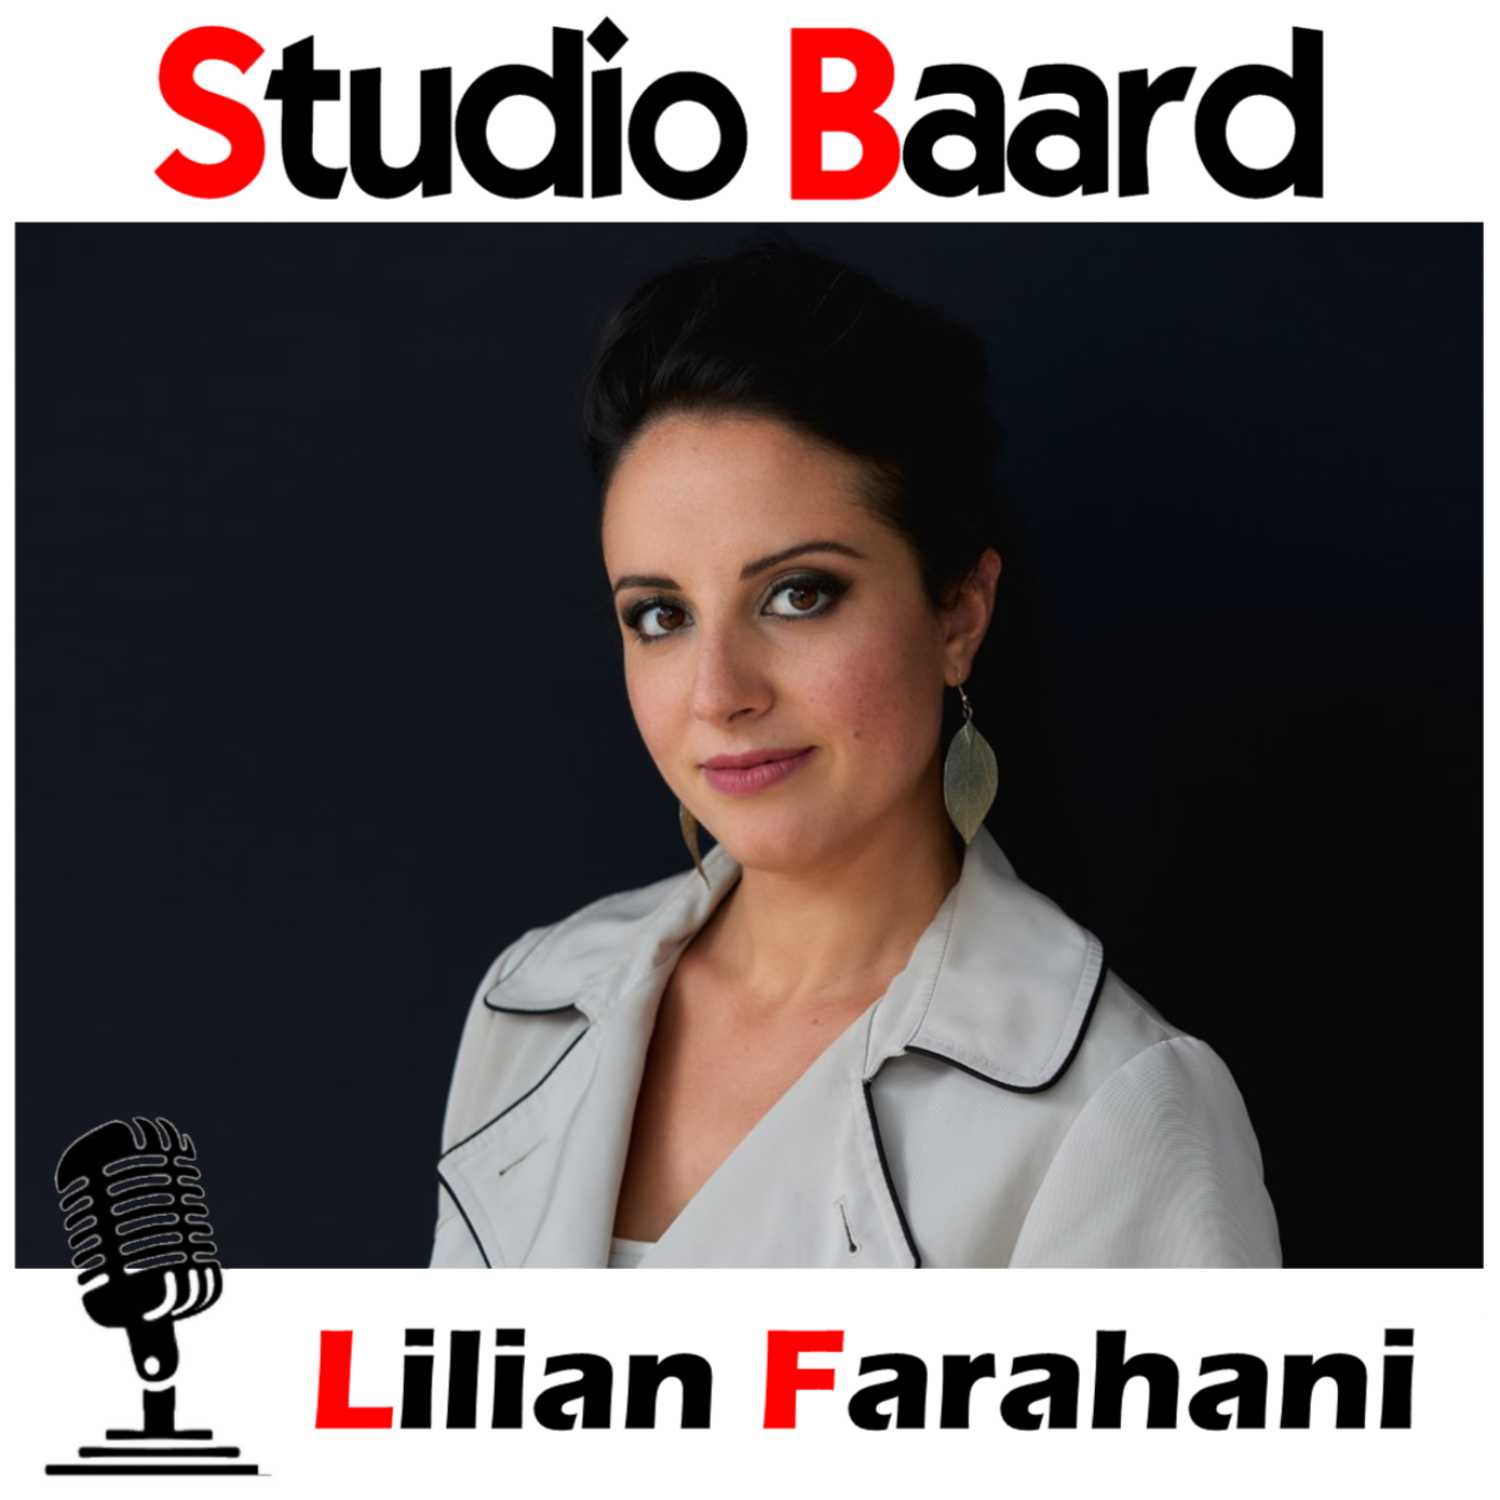 Studio Baard met Lilian Farahani (deel 2)